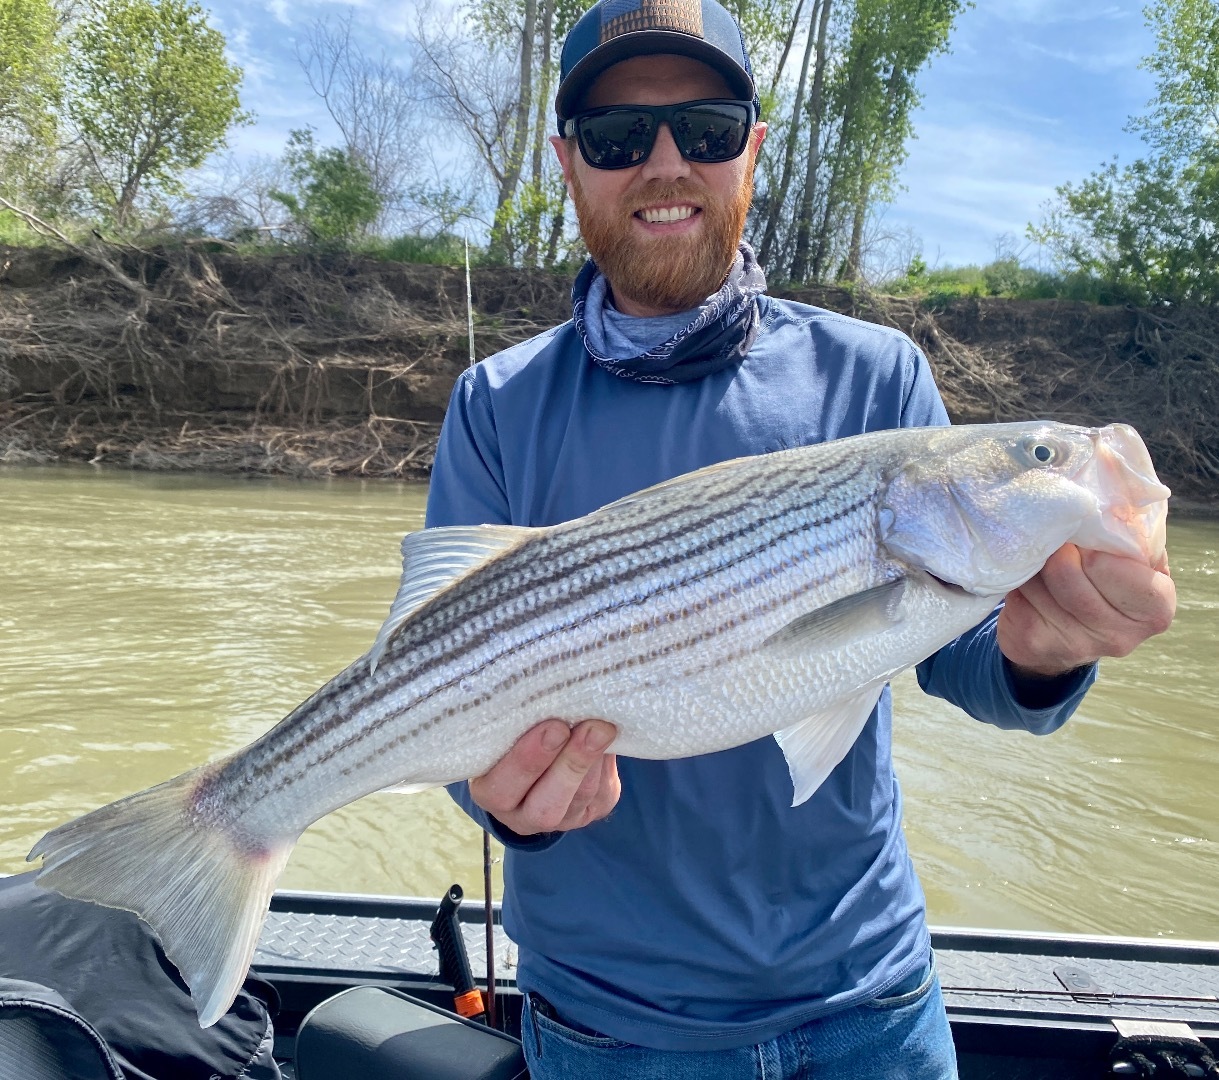 Sac River Striped Bass Season!